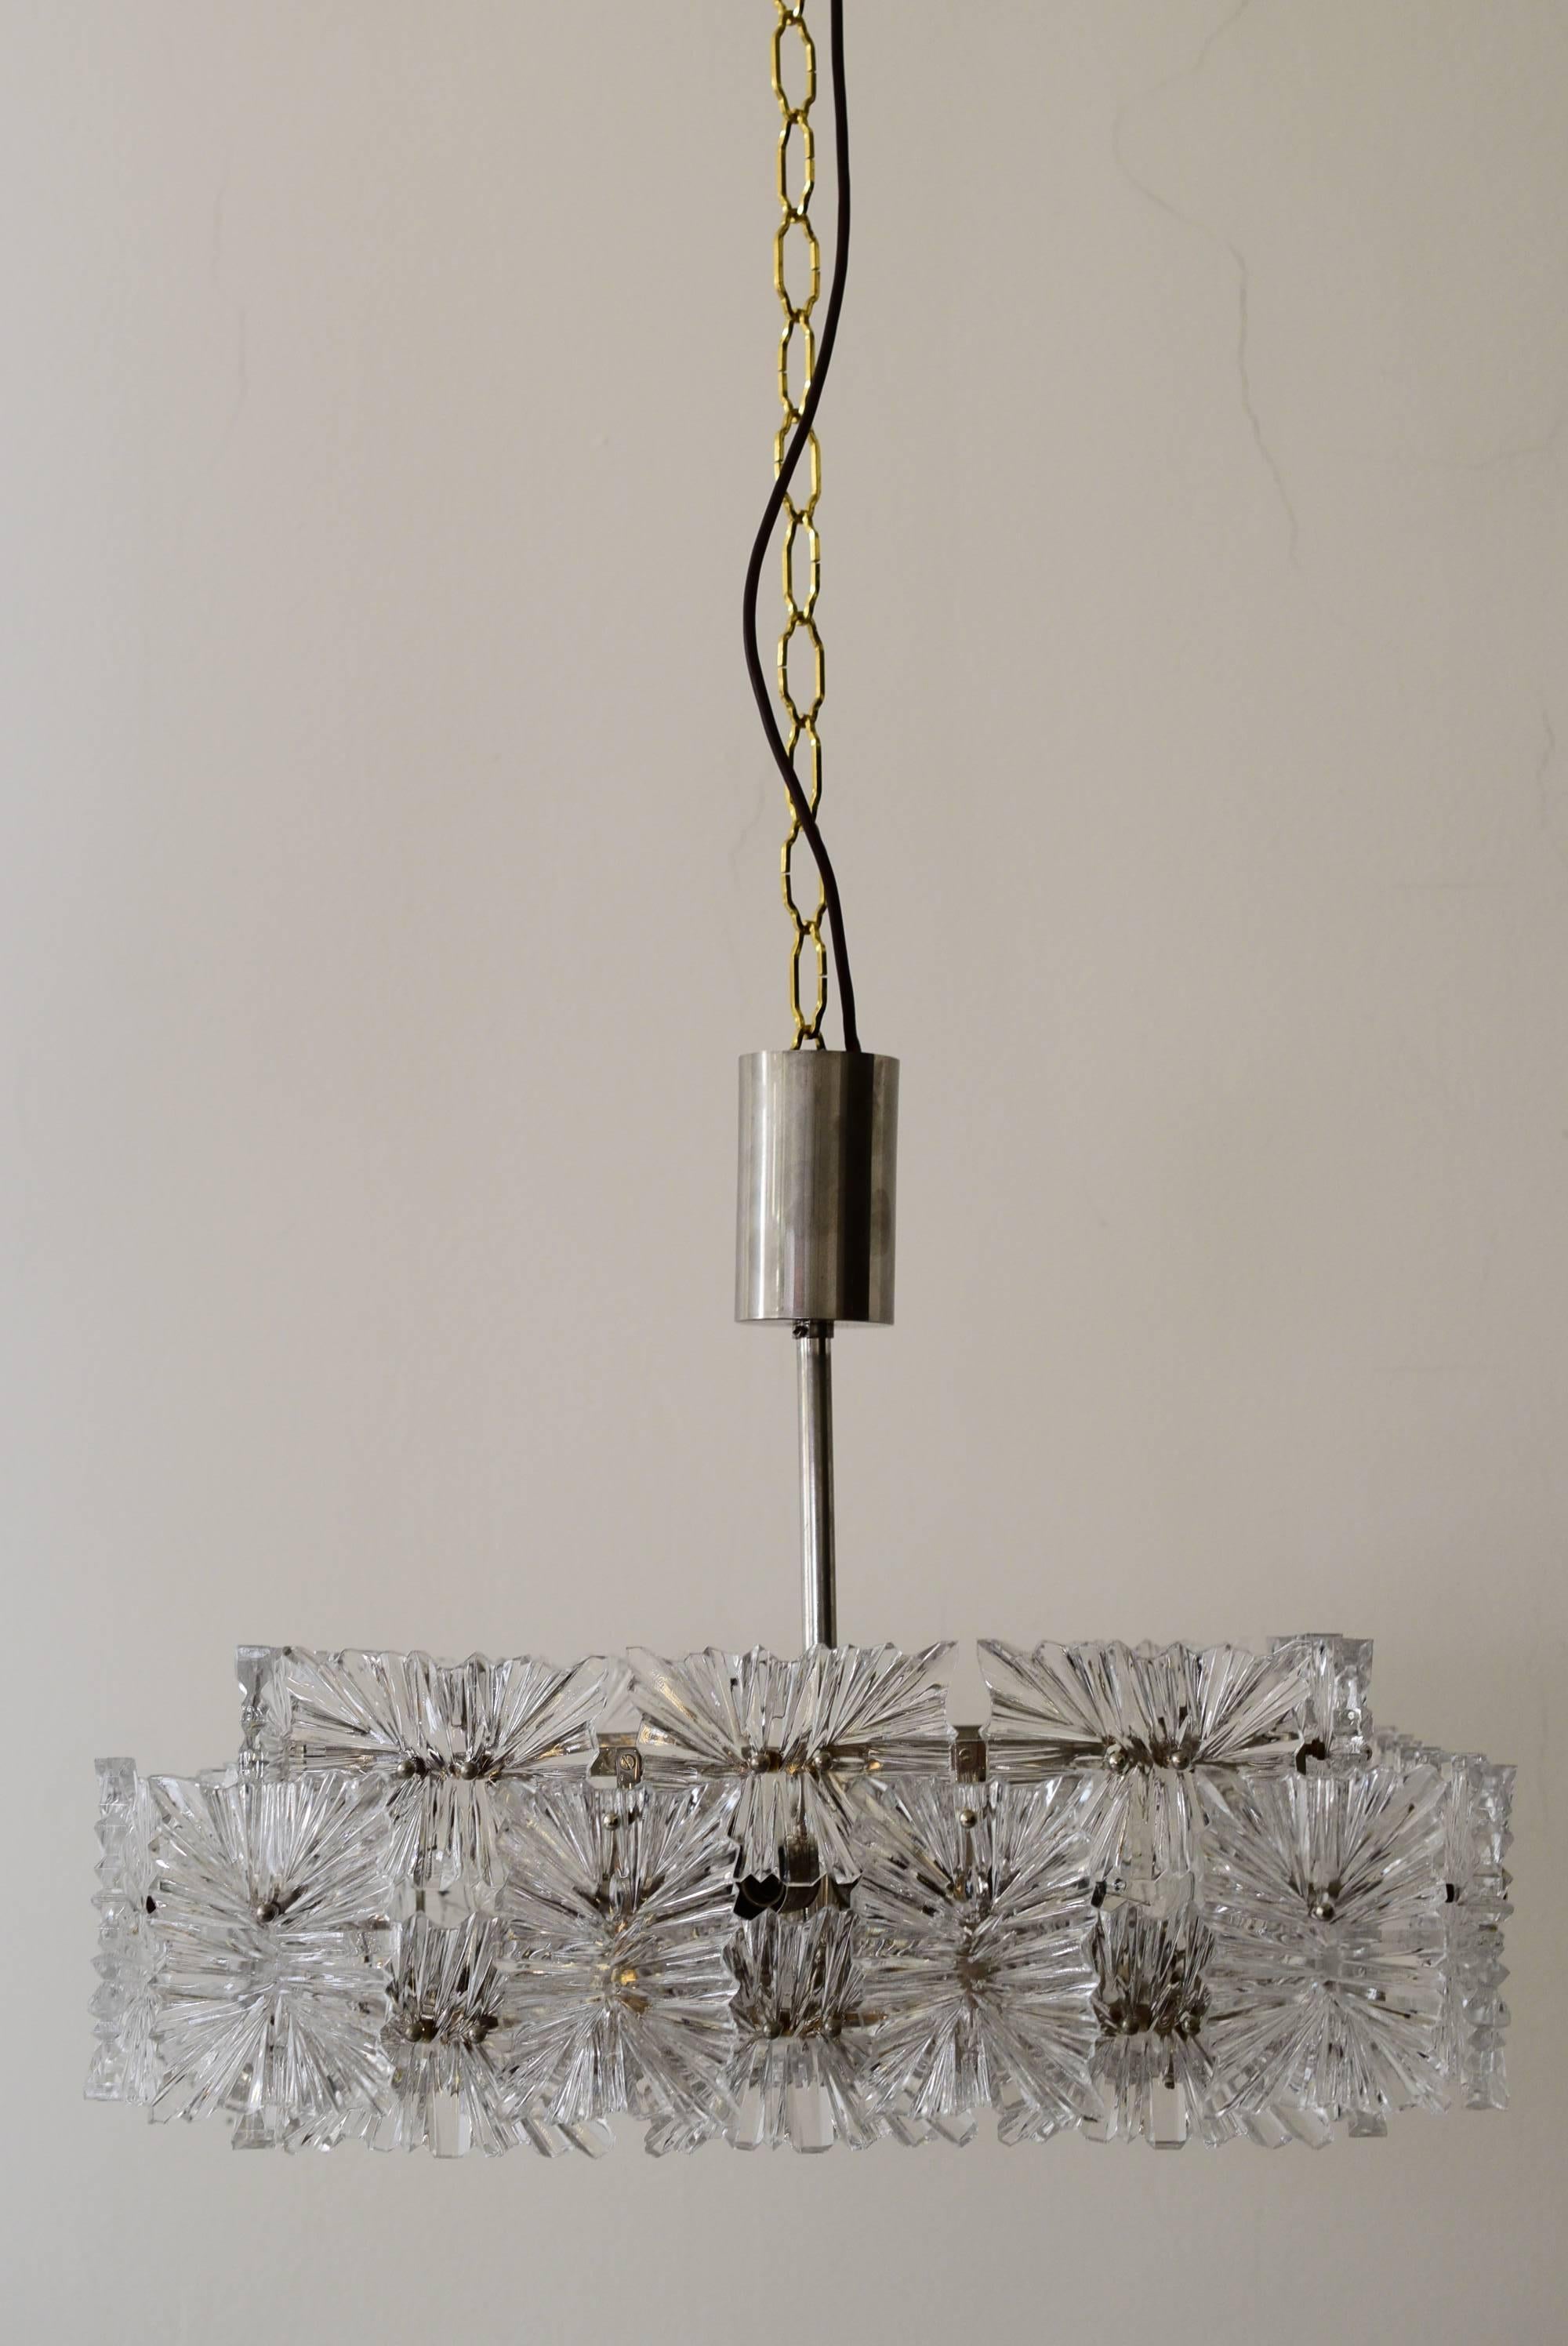 Beautiful Mid-Century Modernist etched glass chandelier by Kinkeldey.
Original condition.